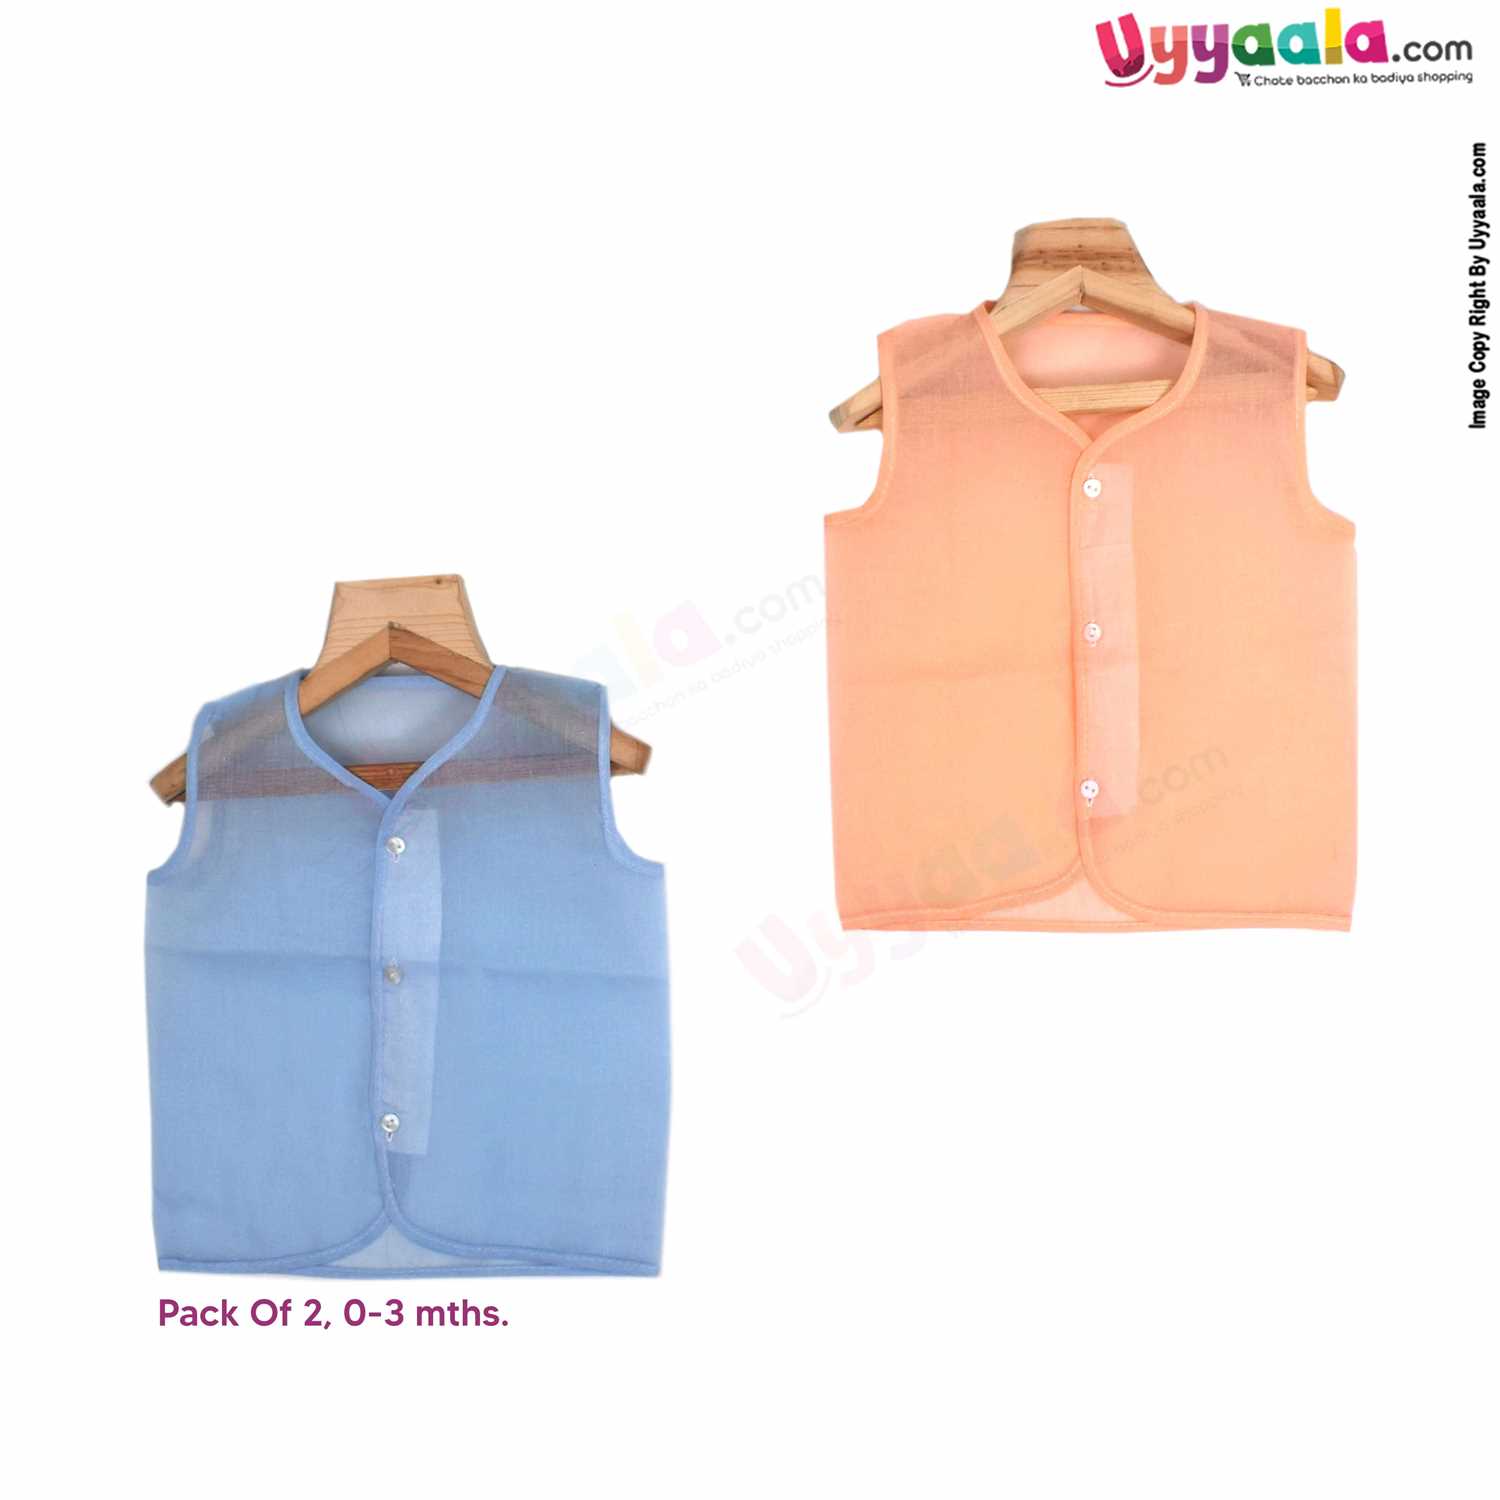 SNUG UP Sleeveless Baby Jabla Set, Front Opening Button Model, Premium Quality Cotton Baby Wear, (0-3M), 2Pack - Orange & Blue